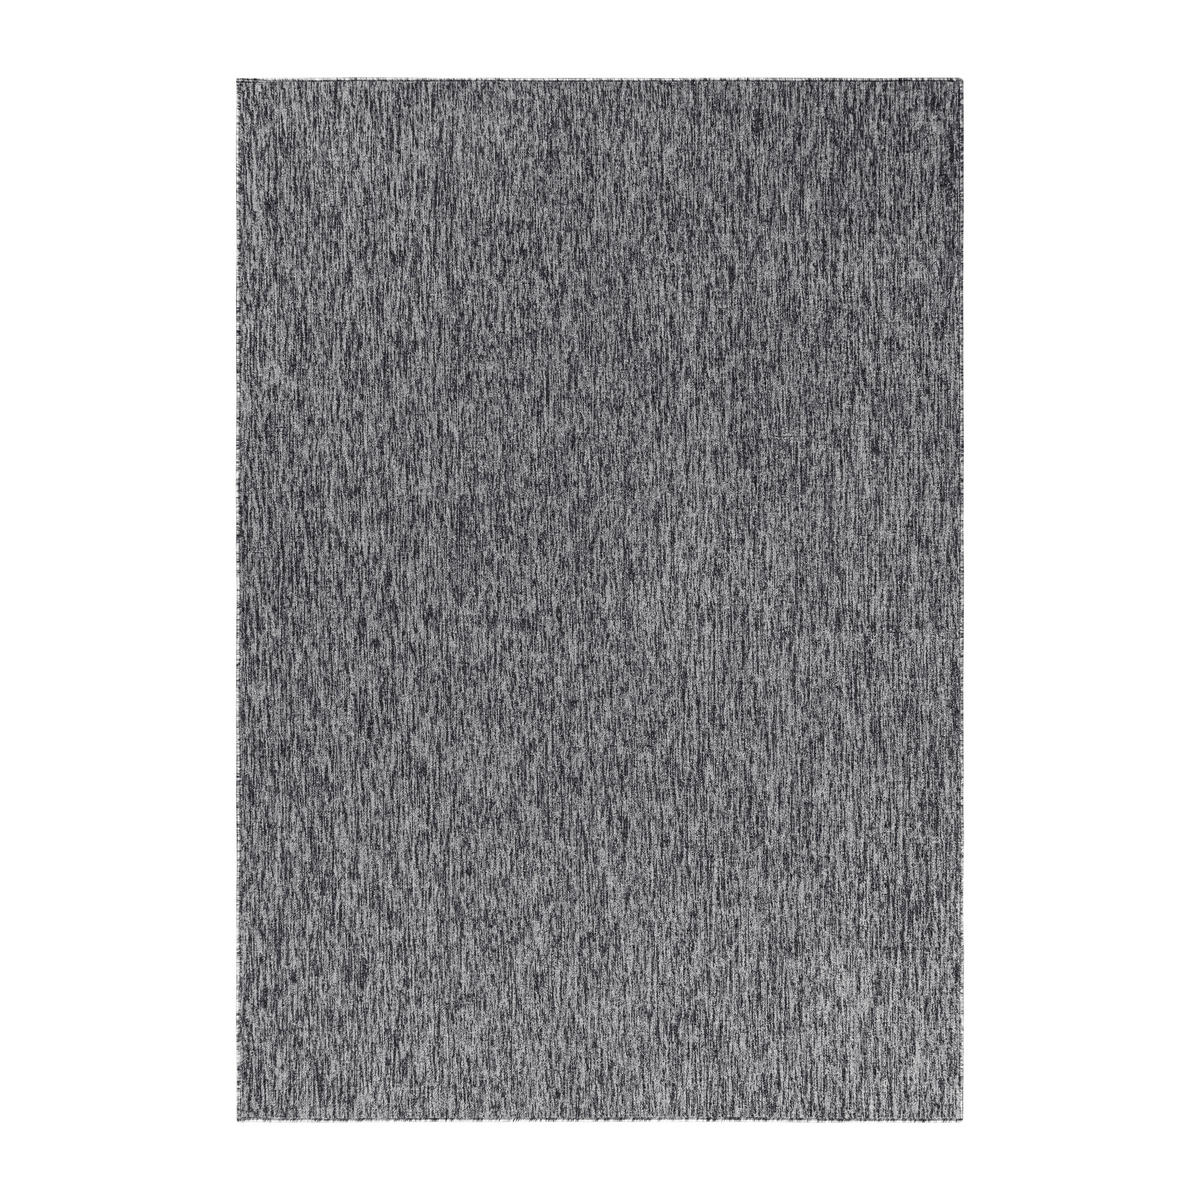 FLACHWEBETEPPICH 120/170 cm Nizza 1800 Grau  - Grau, KONVENTIONELL, Textil (120/170cm) - Novel